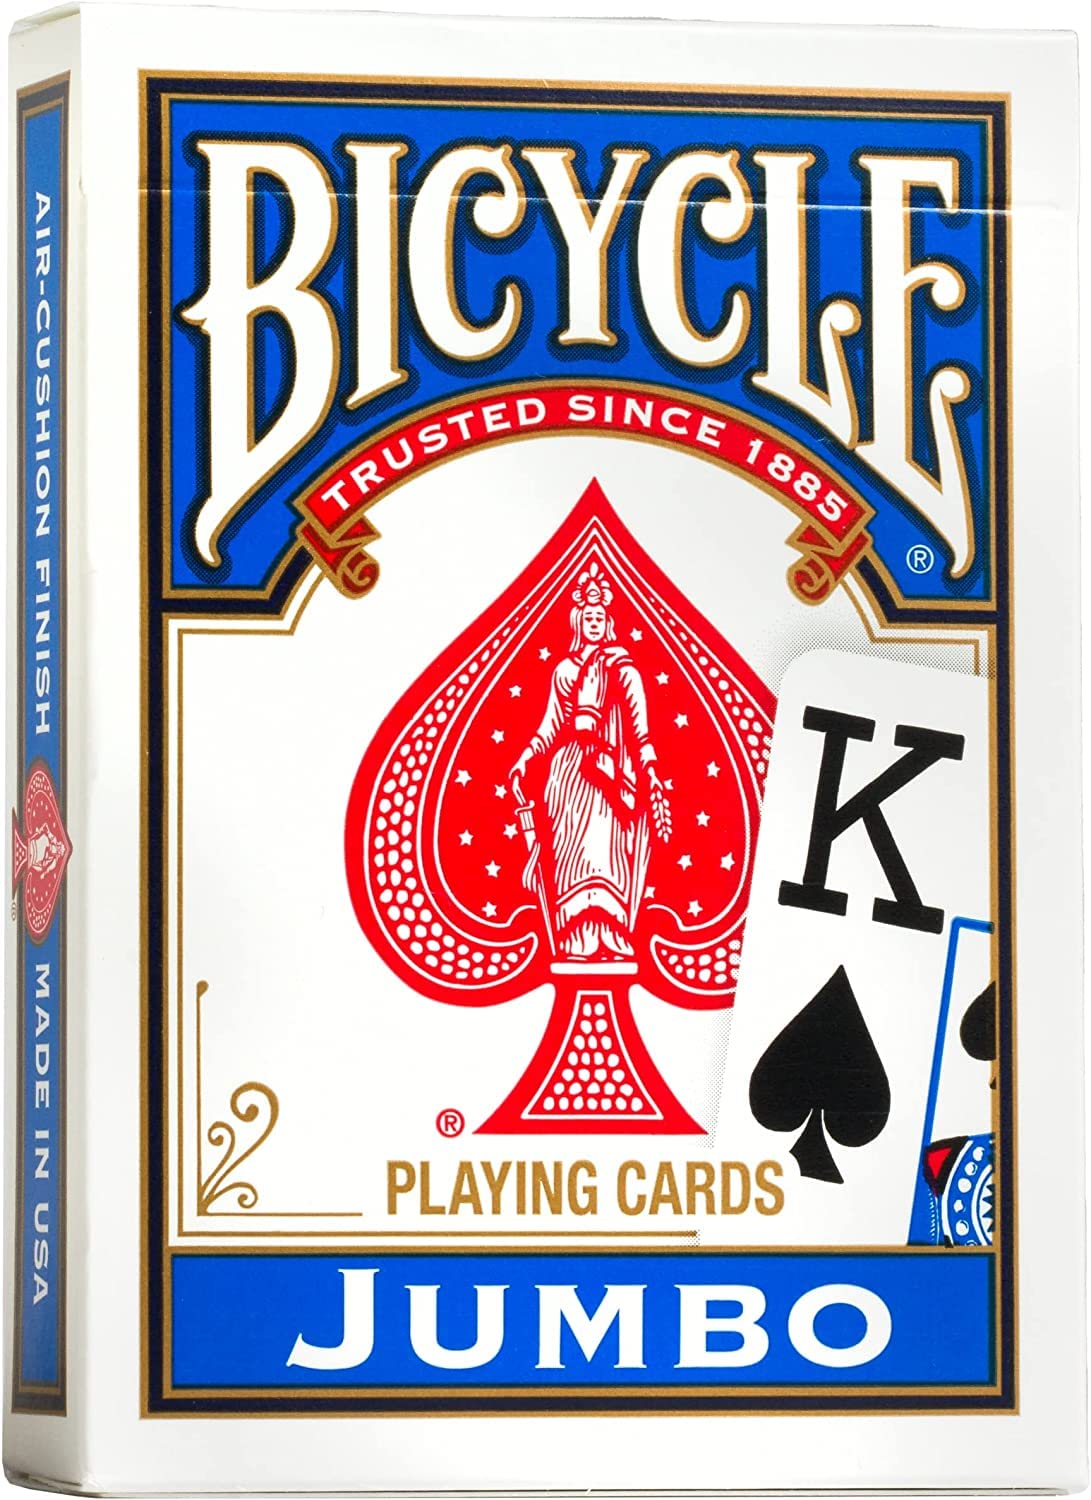 Bicycle Playing Cards: JUMBO (Blue) 